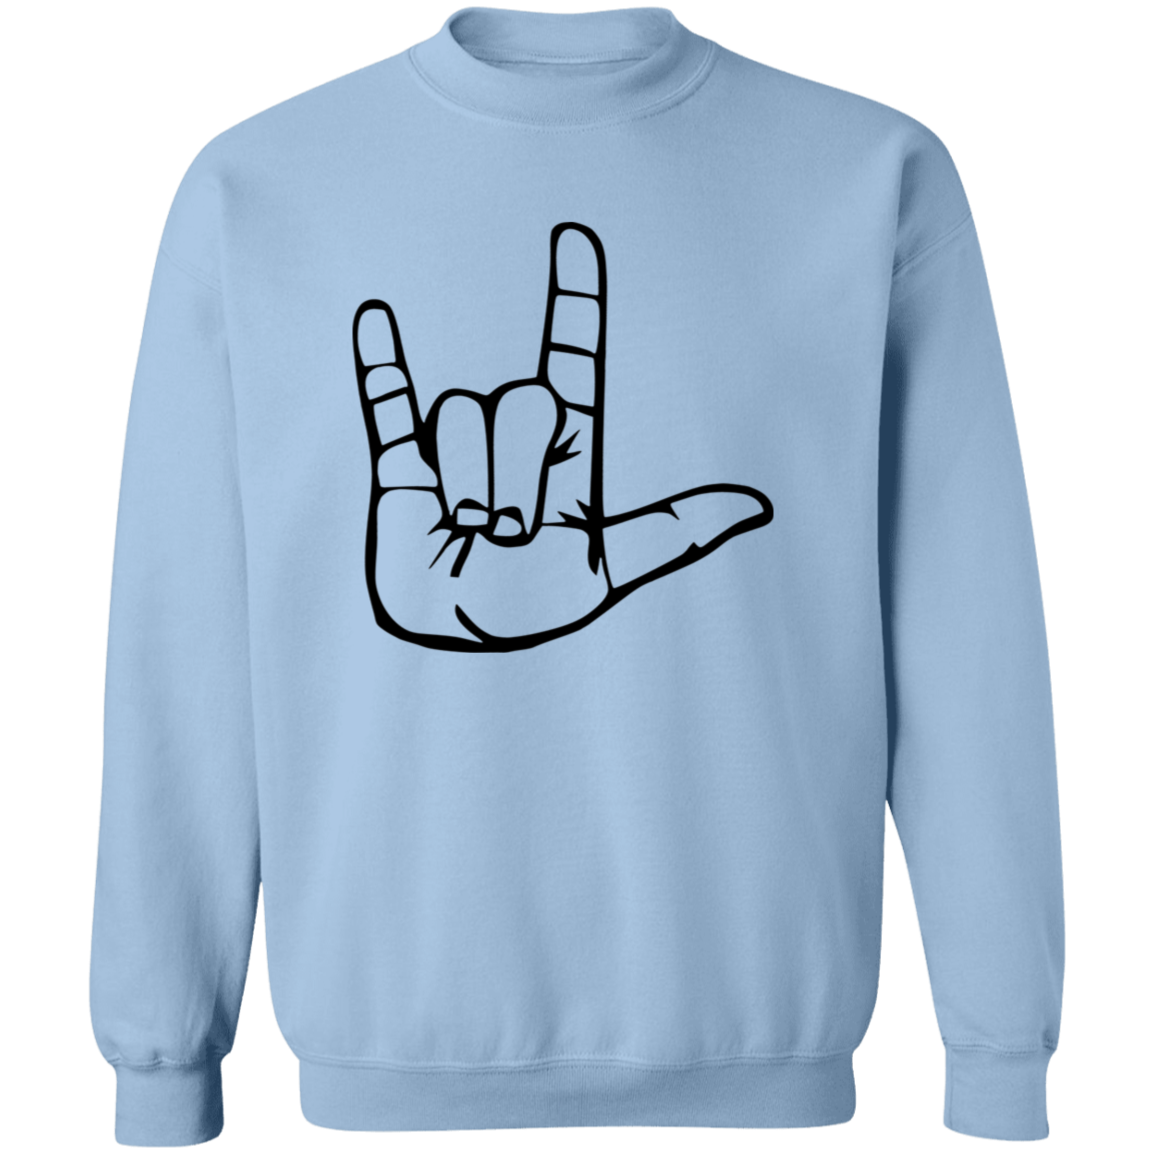 I Love You ASL G180 Crewneck Pullover Sweatshirt